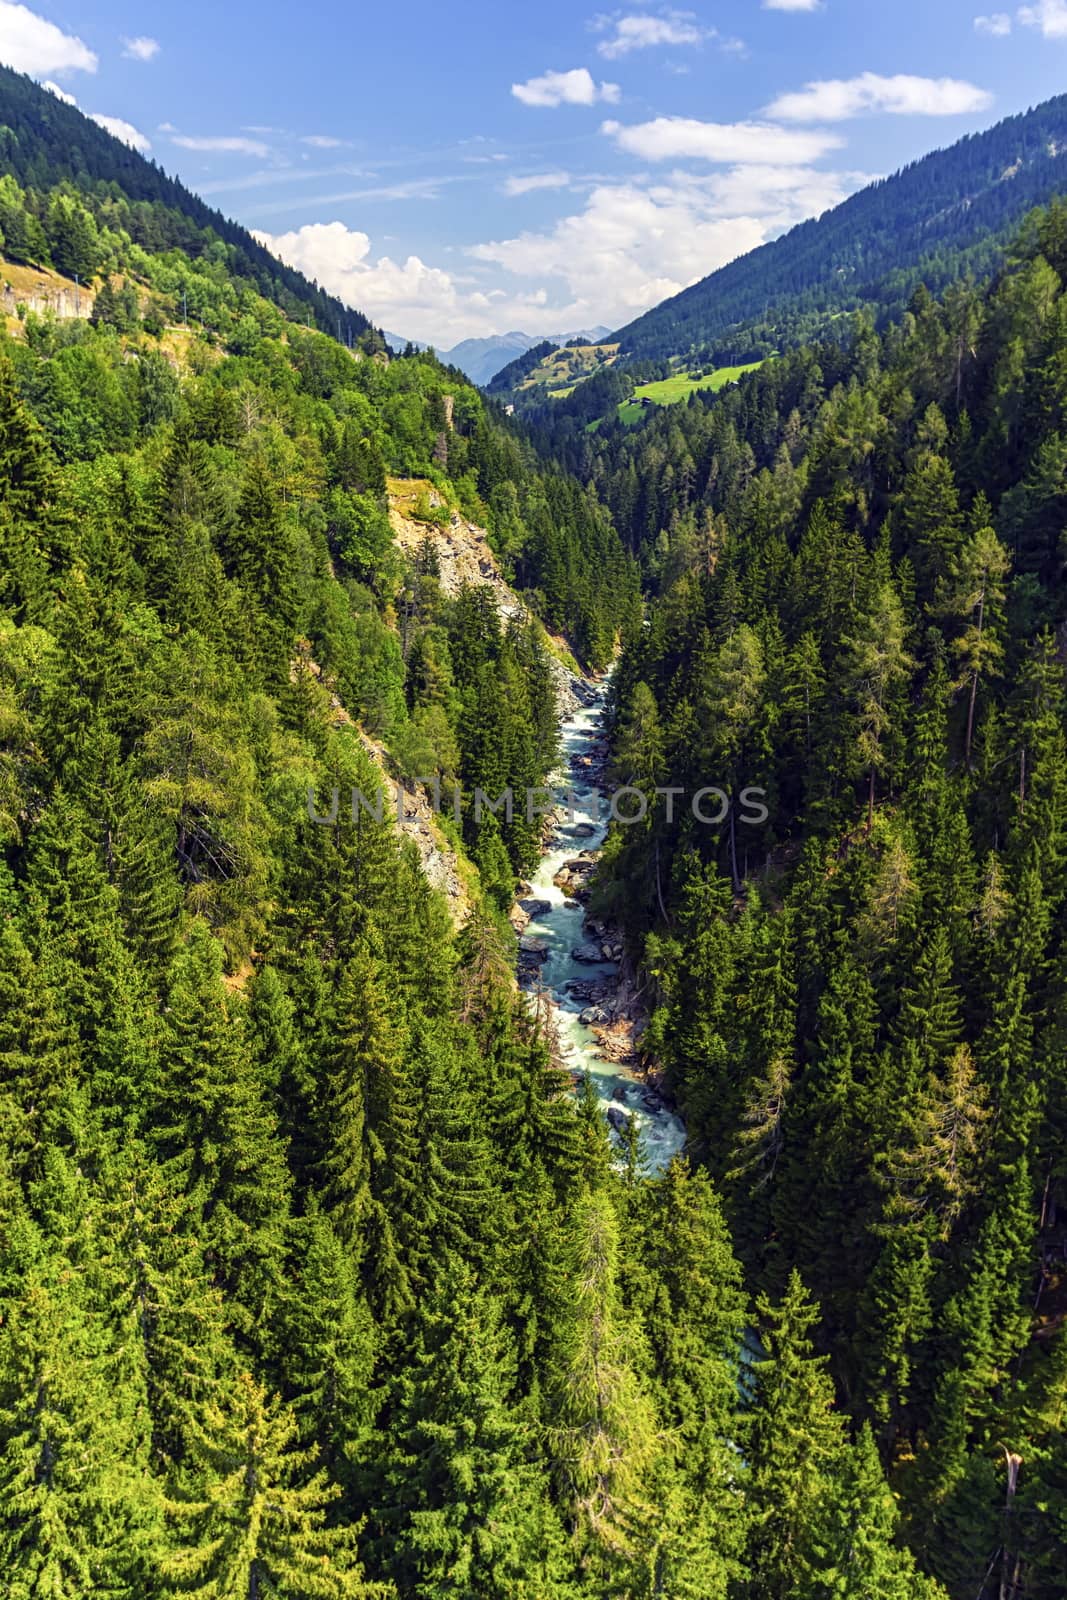 Gorge de la Lama, Valais canton, Switzerland by Elenaphotos21